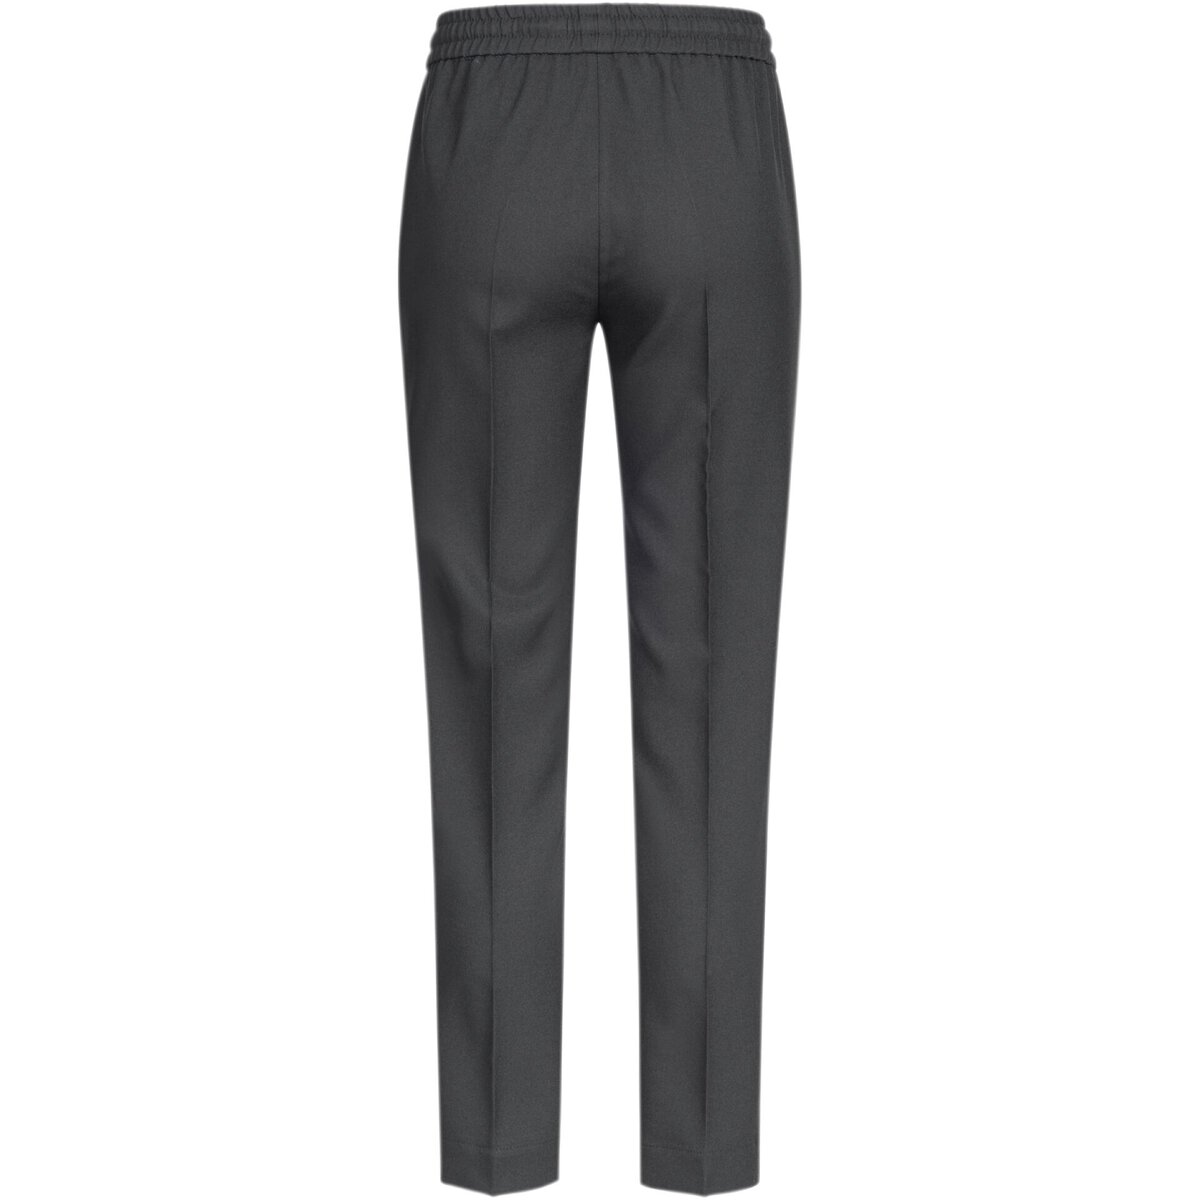 Damen-Hose "Joggpants" schwarz Größe 44 (1)